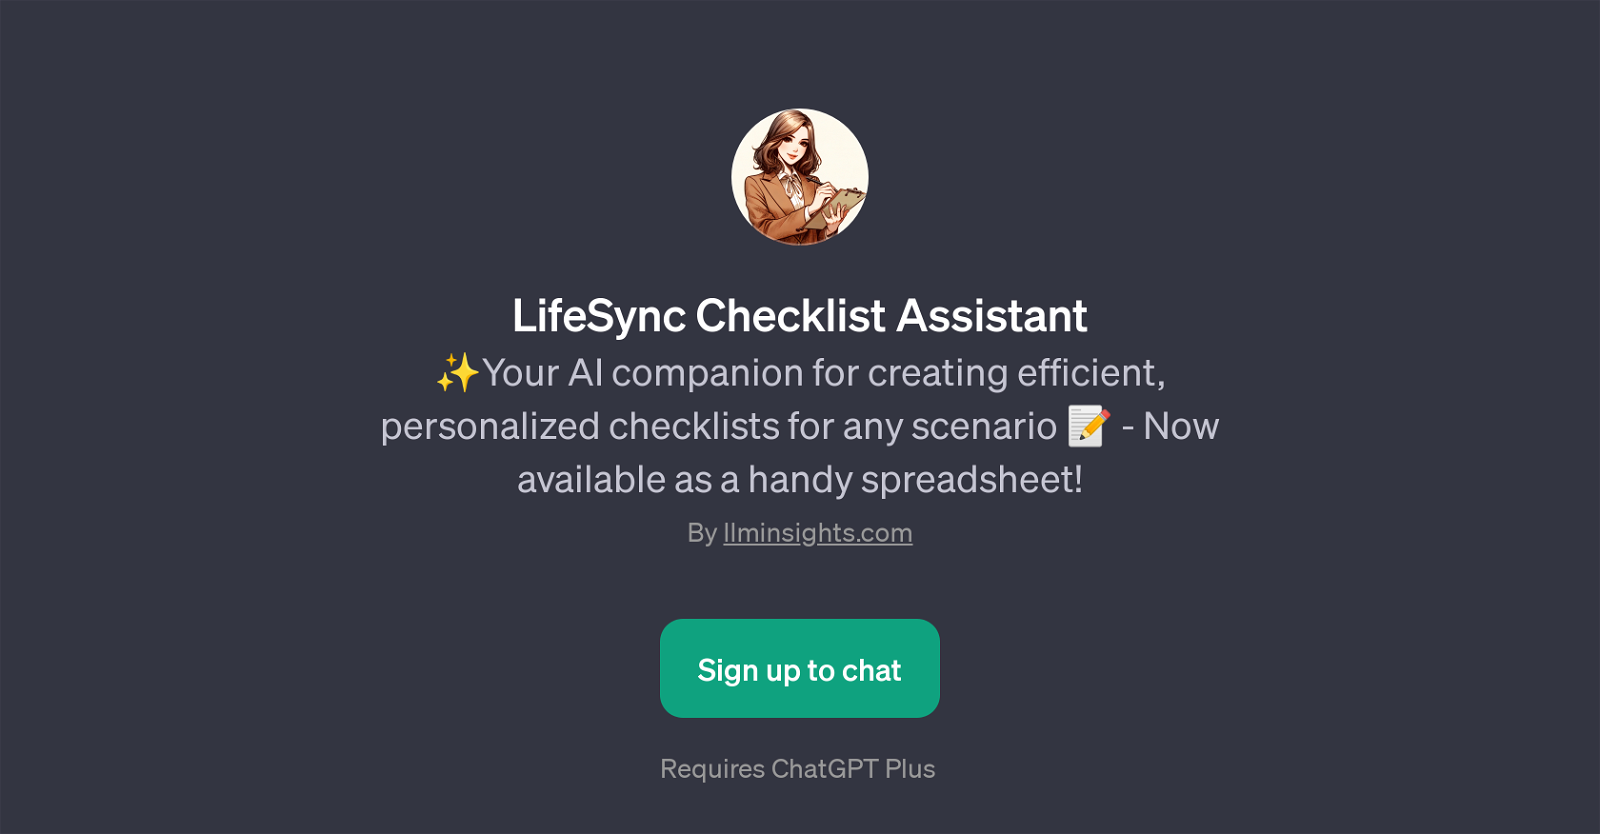 LifeSync Checklist Assistant website